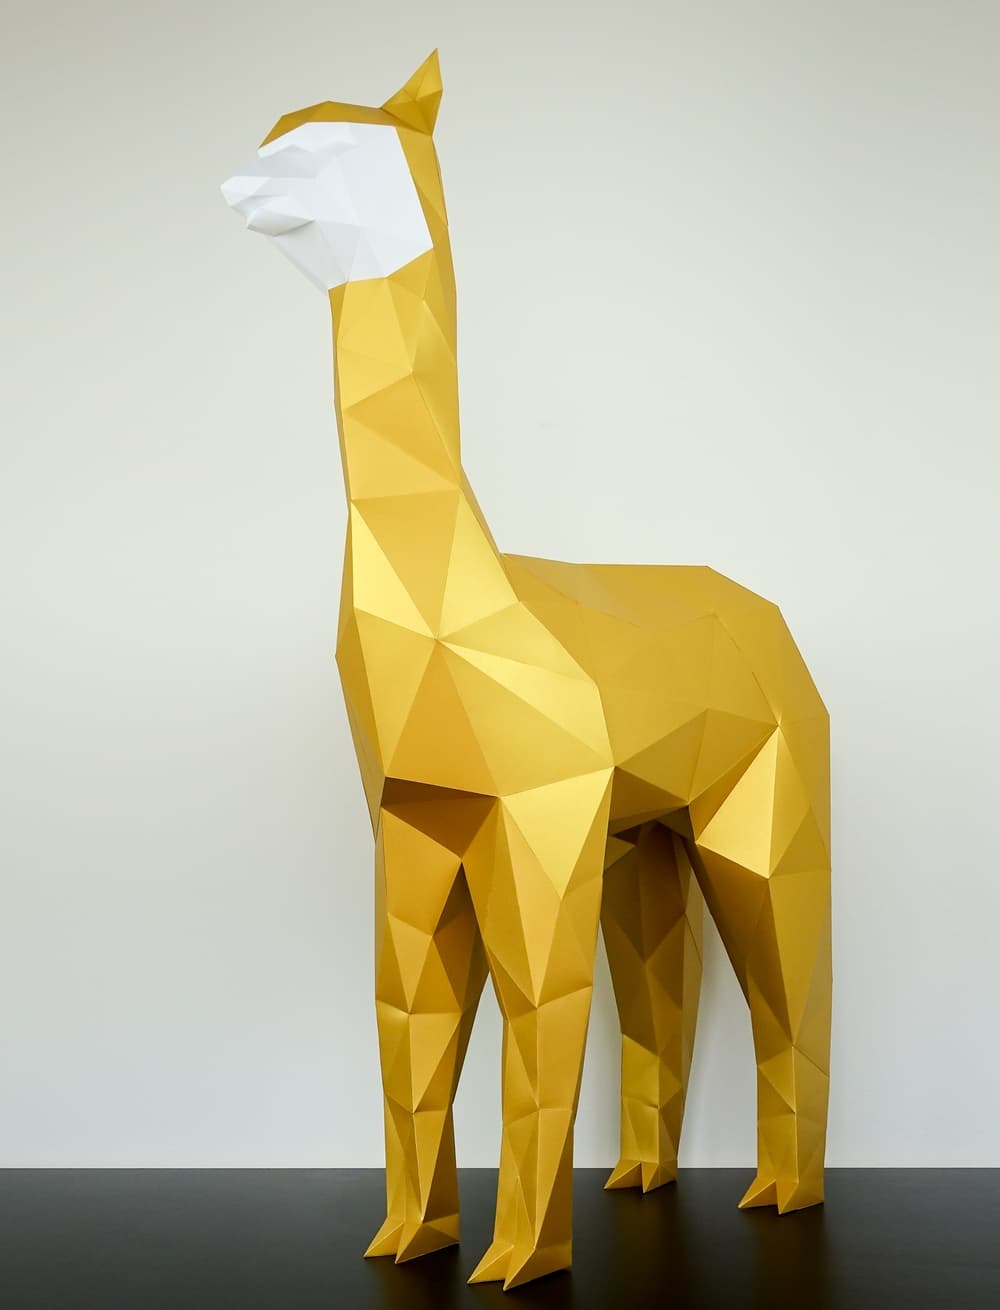 https://www.papertrophy.com/shop/media/image/12/4b/67/Alpaca-Figur-Dekoration-Statue.jpg